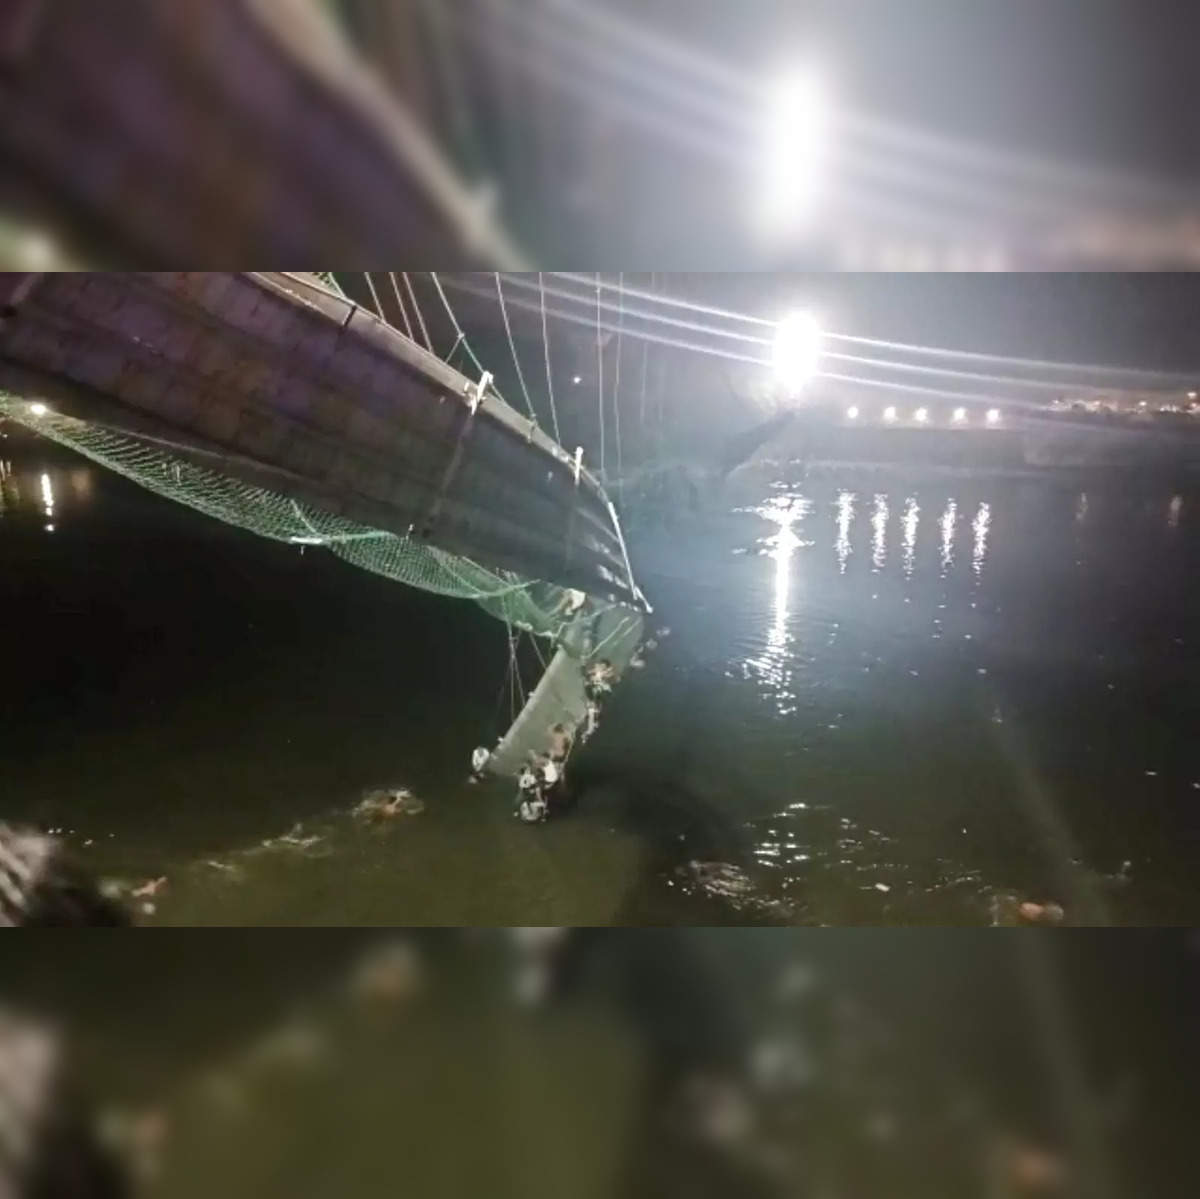 Morbi bridge collapse: Over 130 killed in Morbi bridge collapse; Doctors  struggle to handle injured - The Economic Times